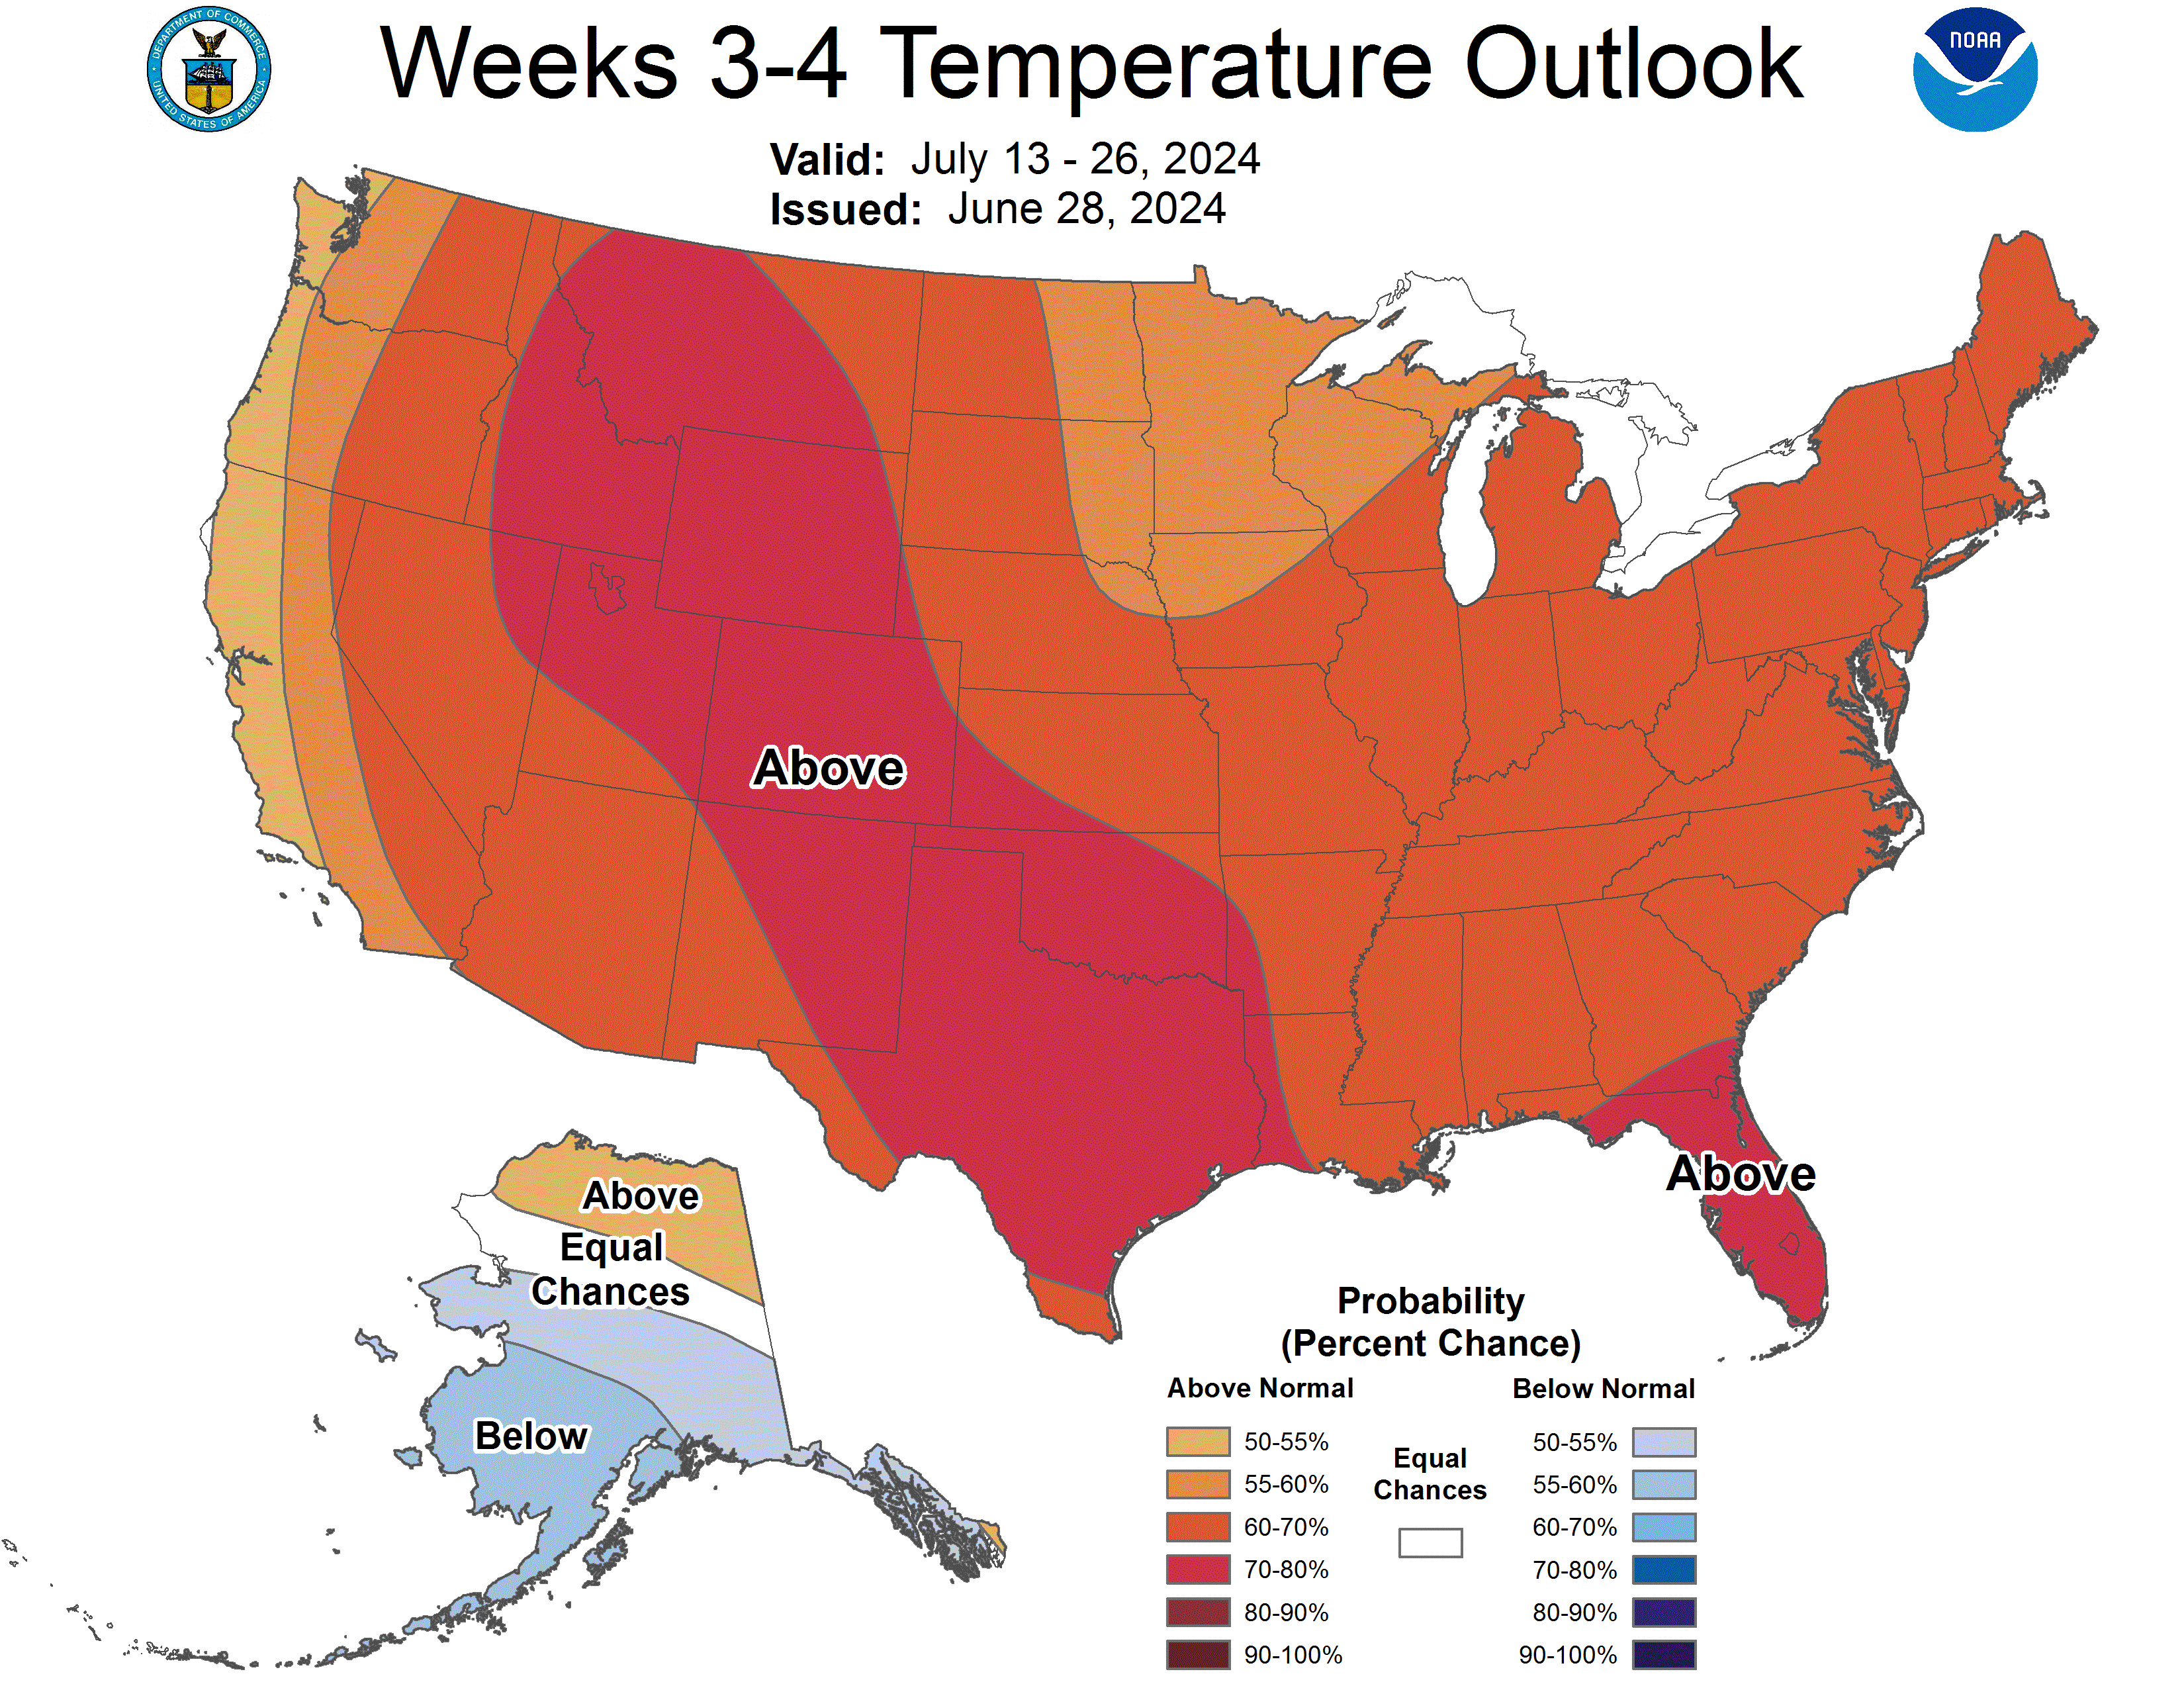 3 - 4 Week Temperature